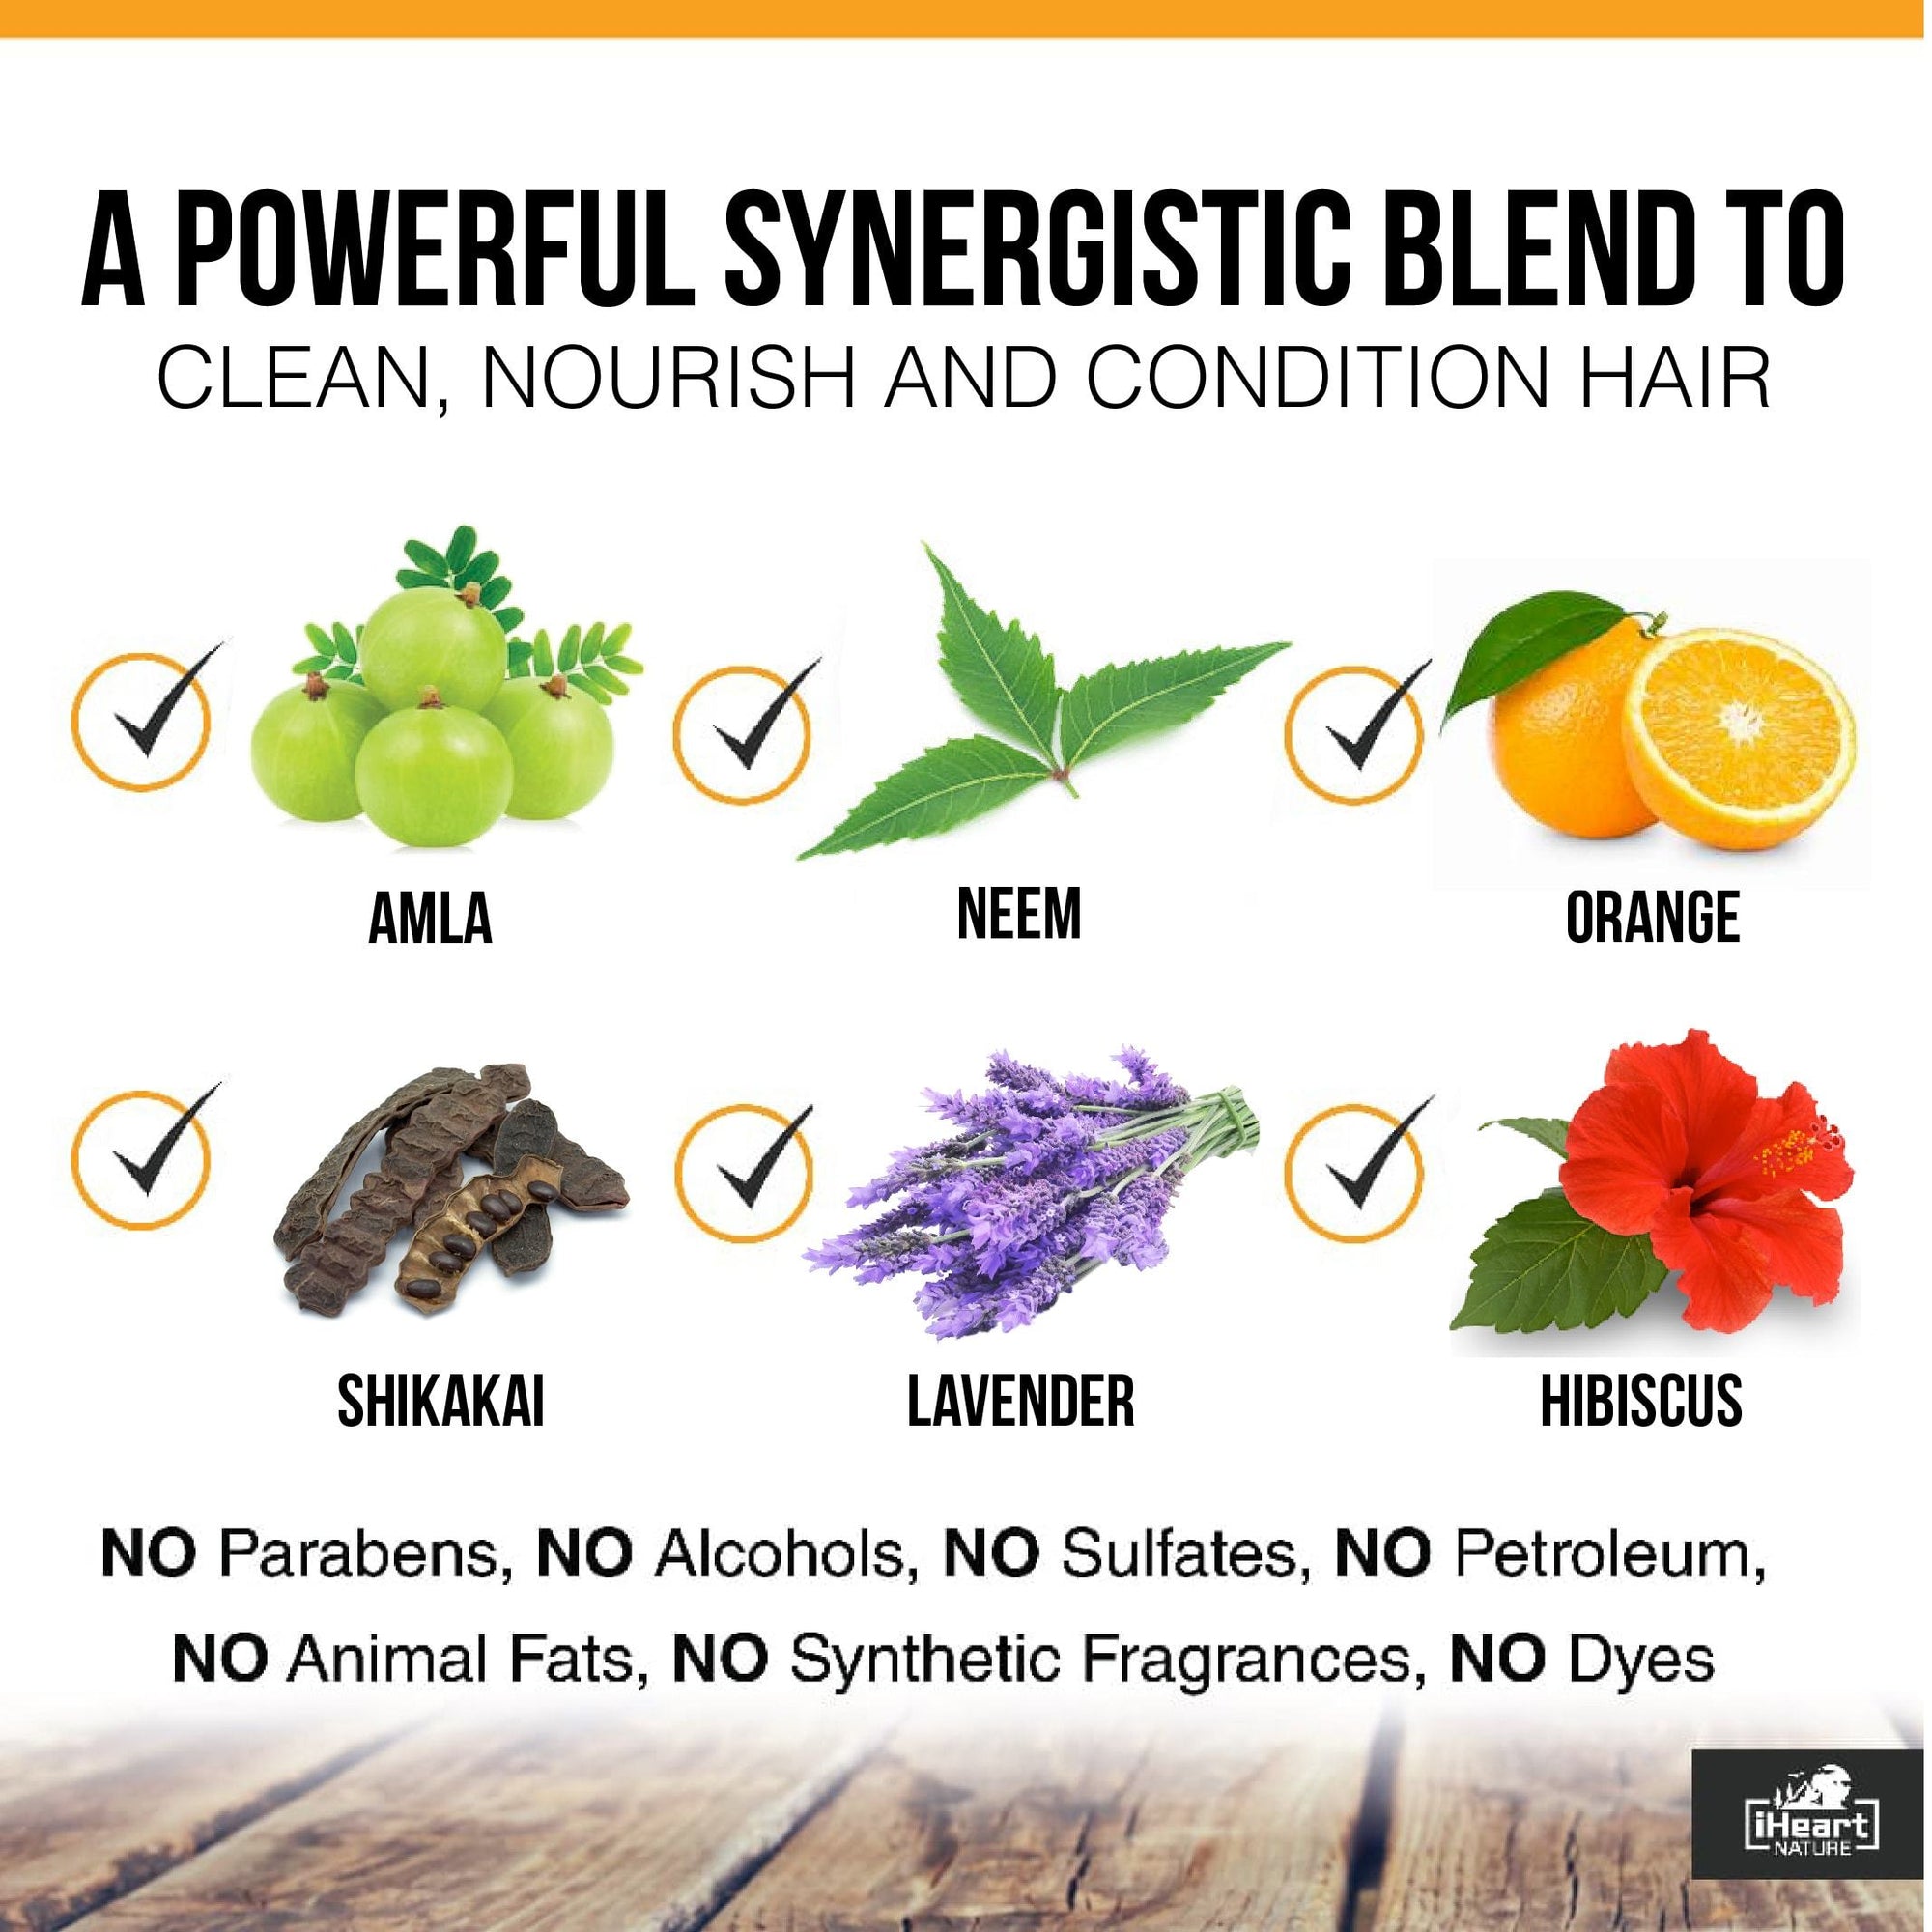 Organic Shampoo Bar with Neem, Amla, Shikakai, & Hibiscus (Floral) - iHeart Nature